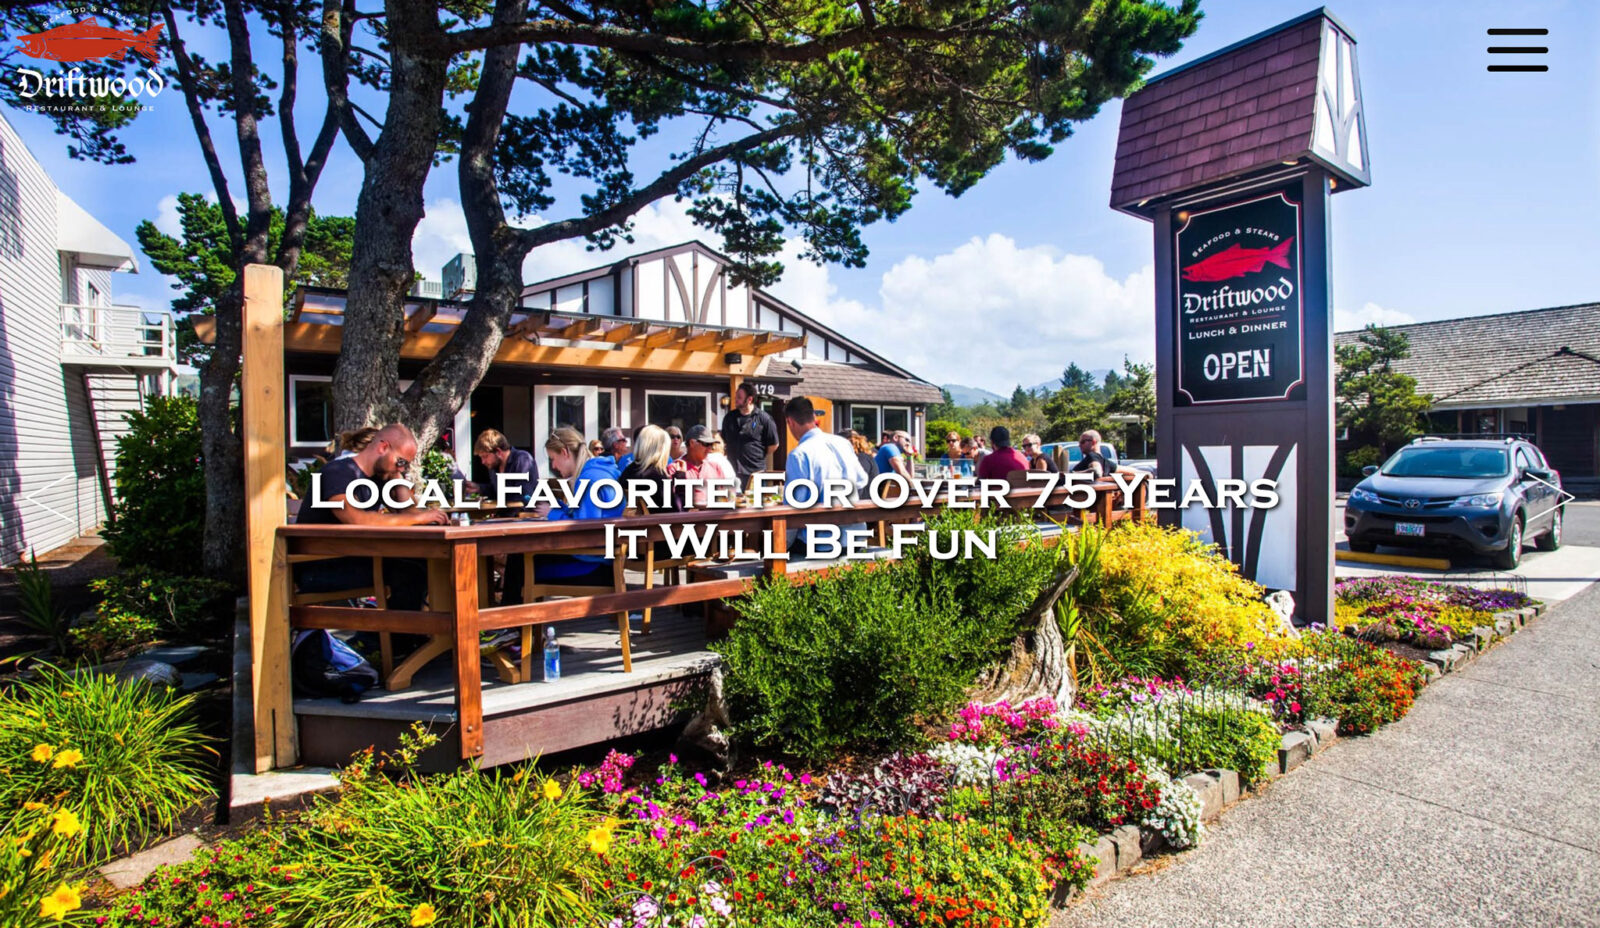 Driftwood restaurant website in Cannon Beach, Oregon